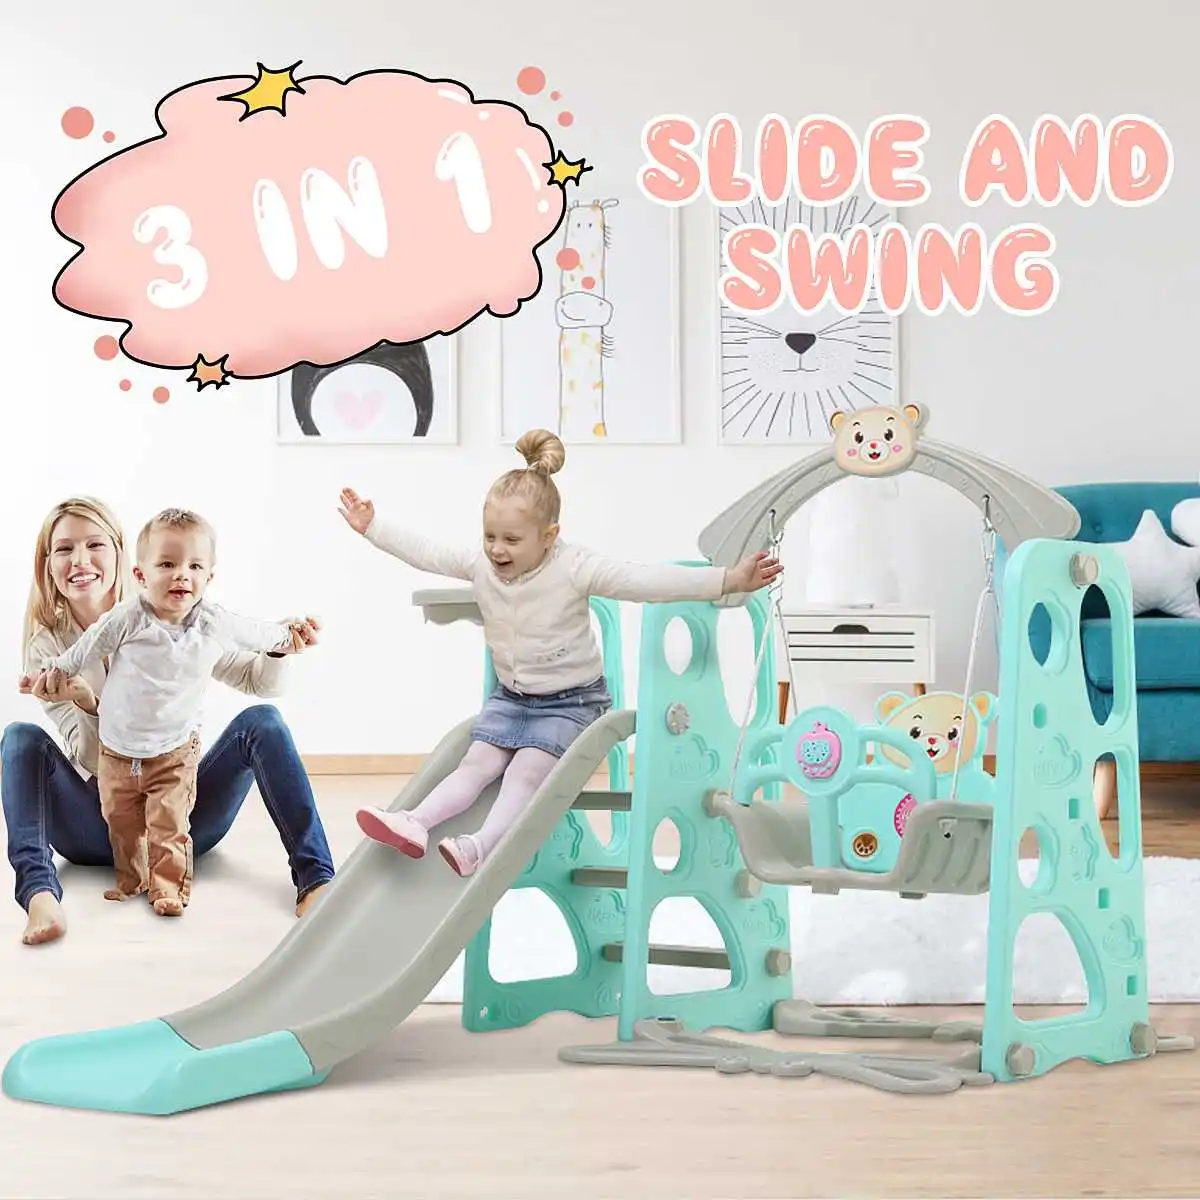 Blue ENHENG 3 in 1 Children Slide Swing Basketball Hoop Home Kids Playground Plastic Slides Set Toy Indoor Outdoor Climbing Family Kindergarten 